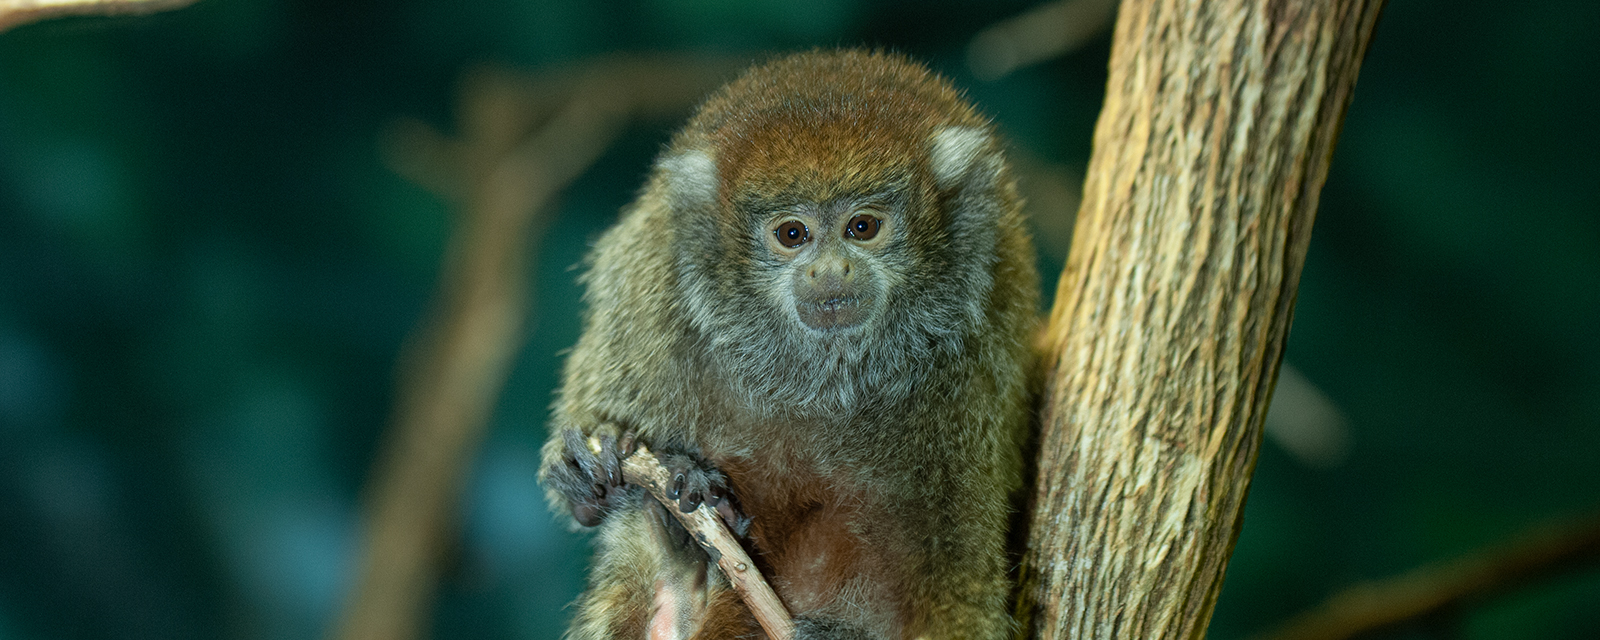 Bolivian gray titi monkey in exhibit